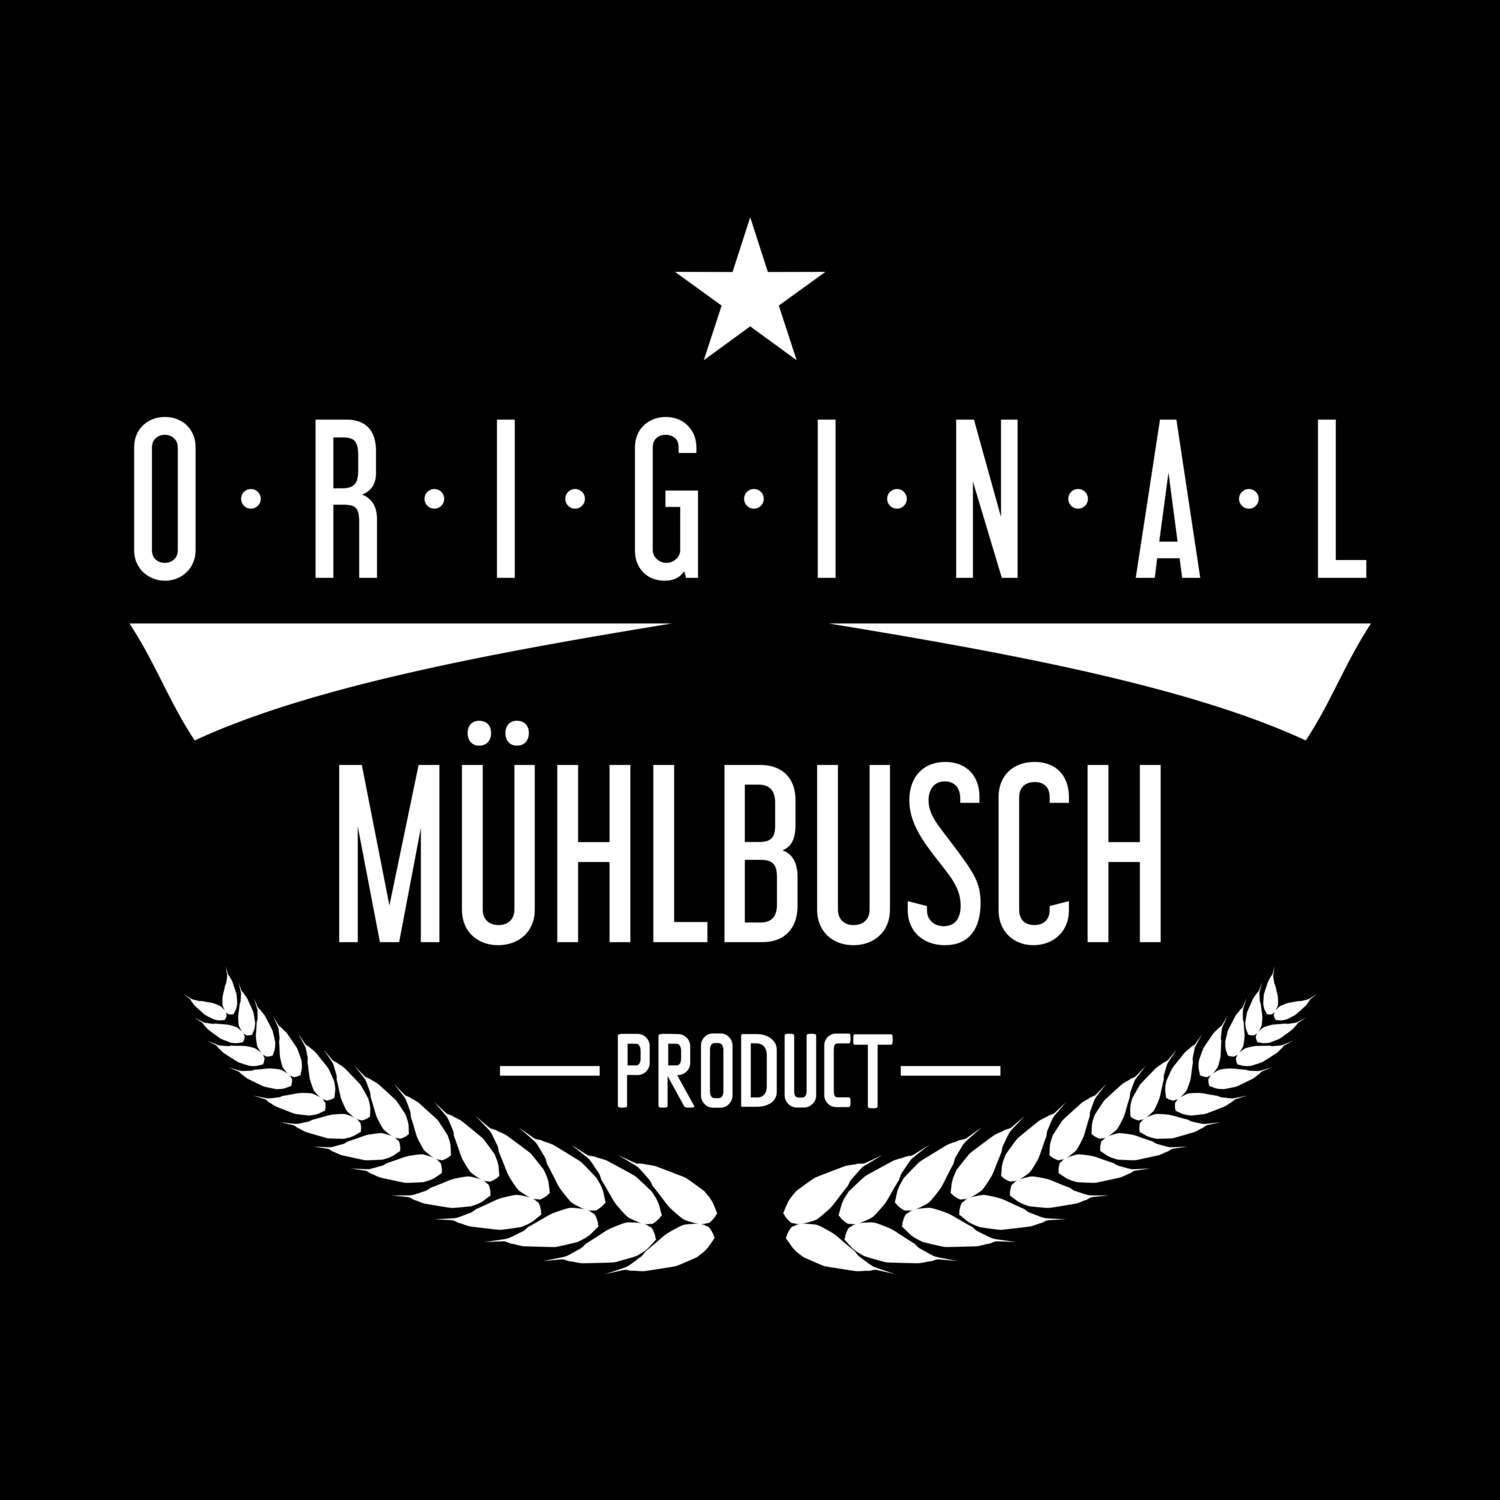 Mühlbusch T-Shirt »Original Product«